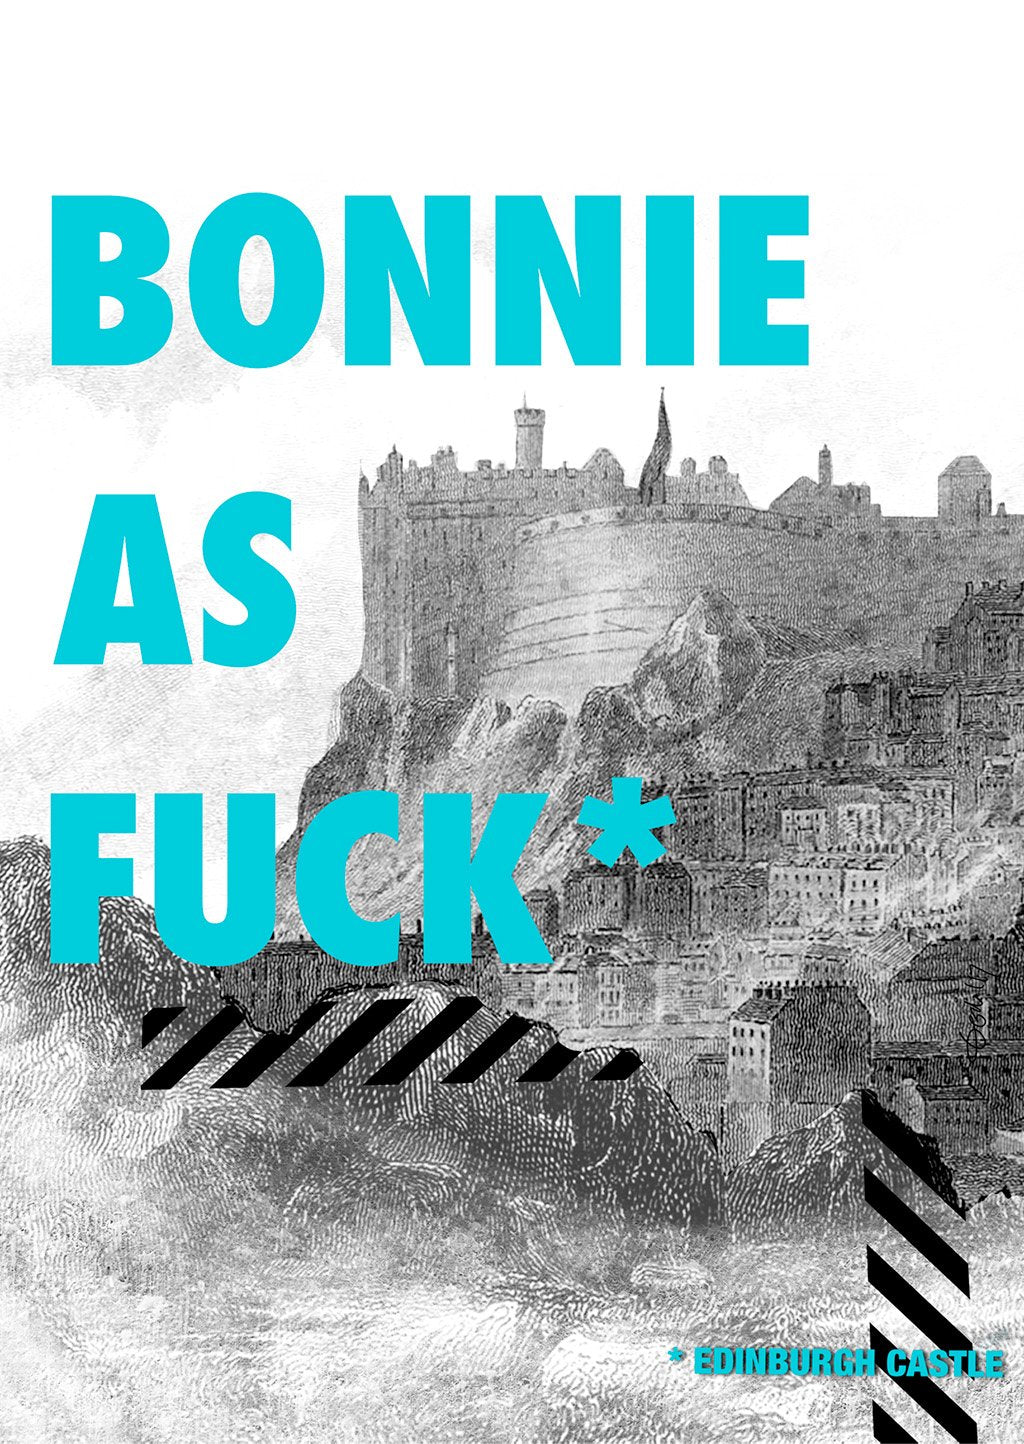 Bonnie Edinburgh Castle Greeting Card